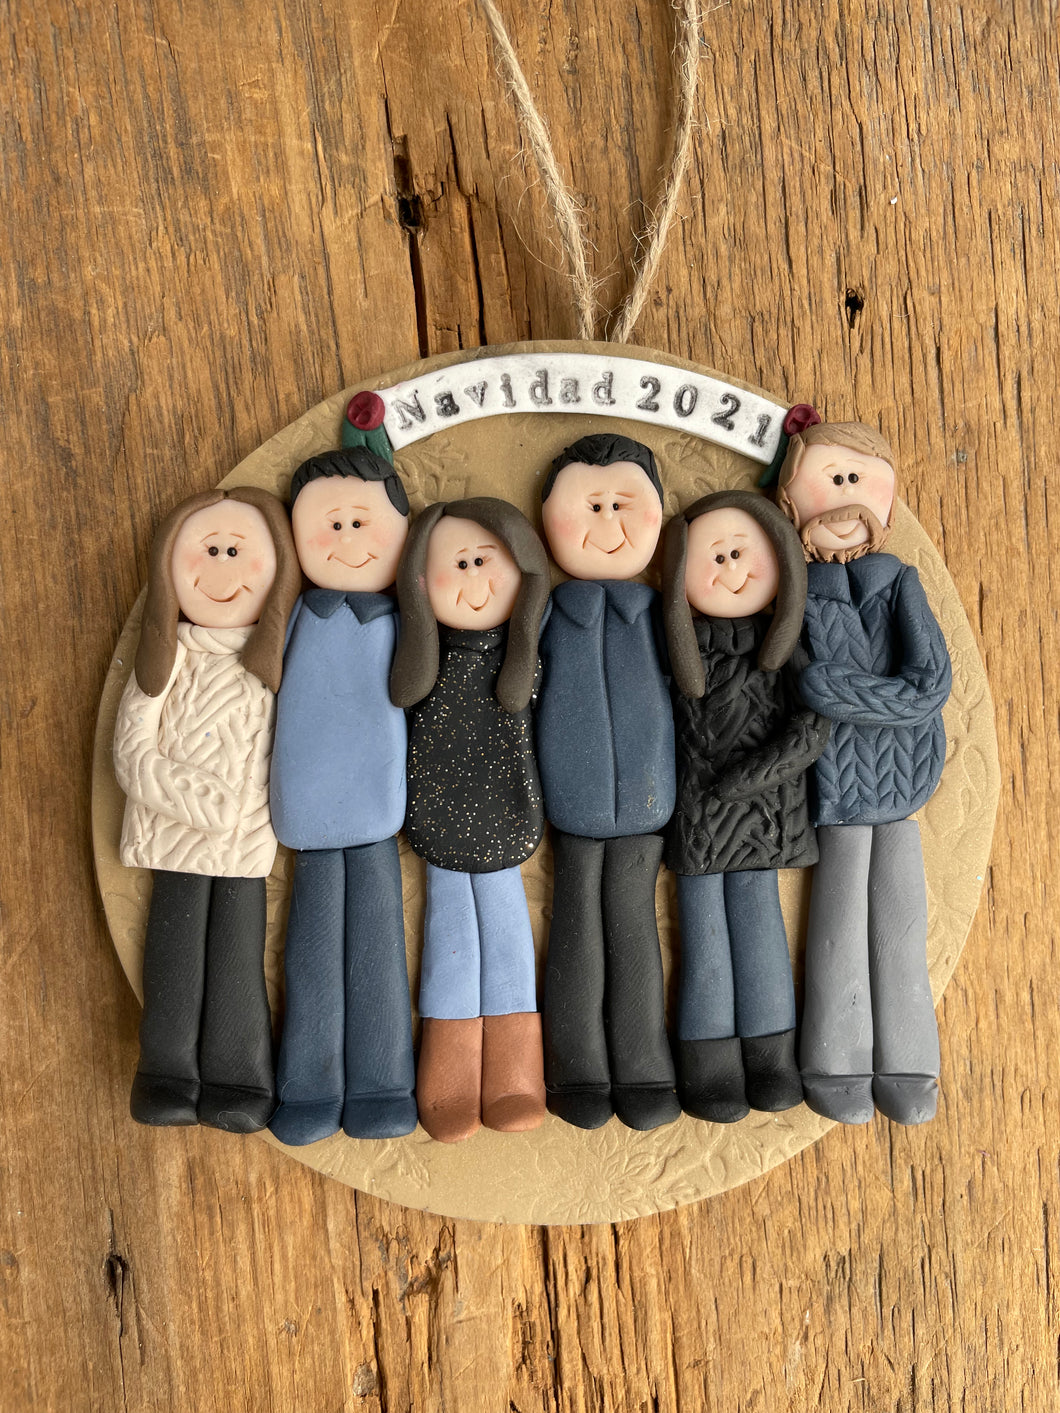 6 Member custom clay family portrait Christmas ornament